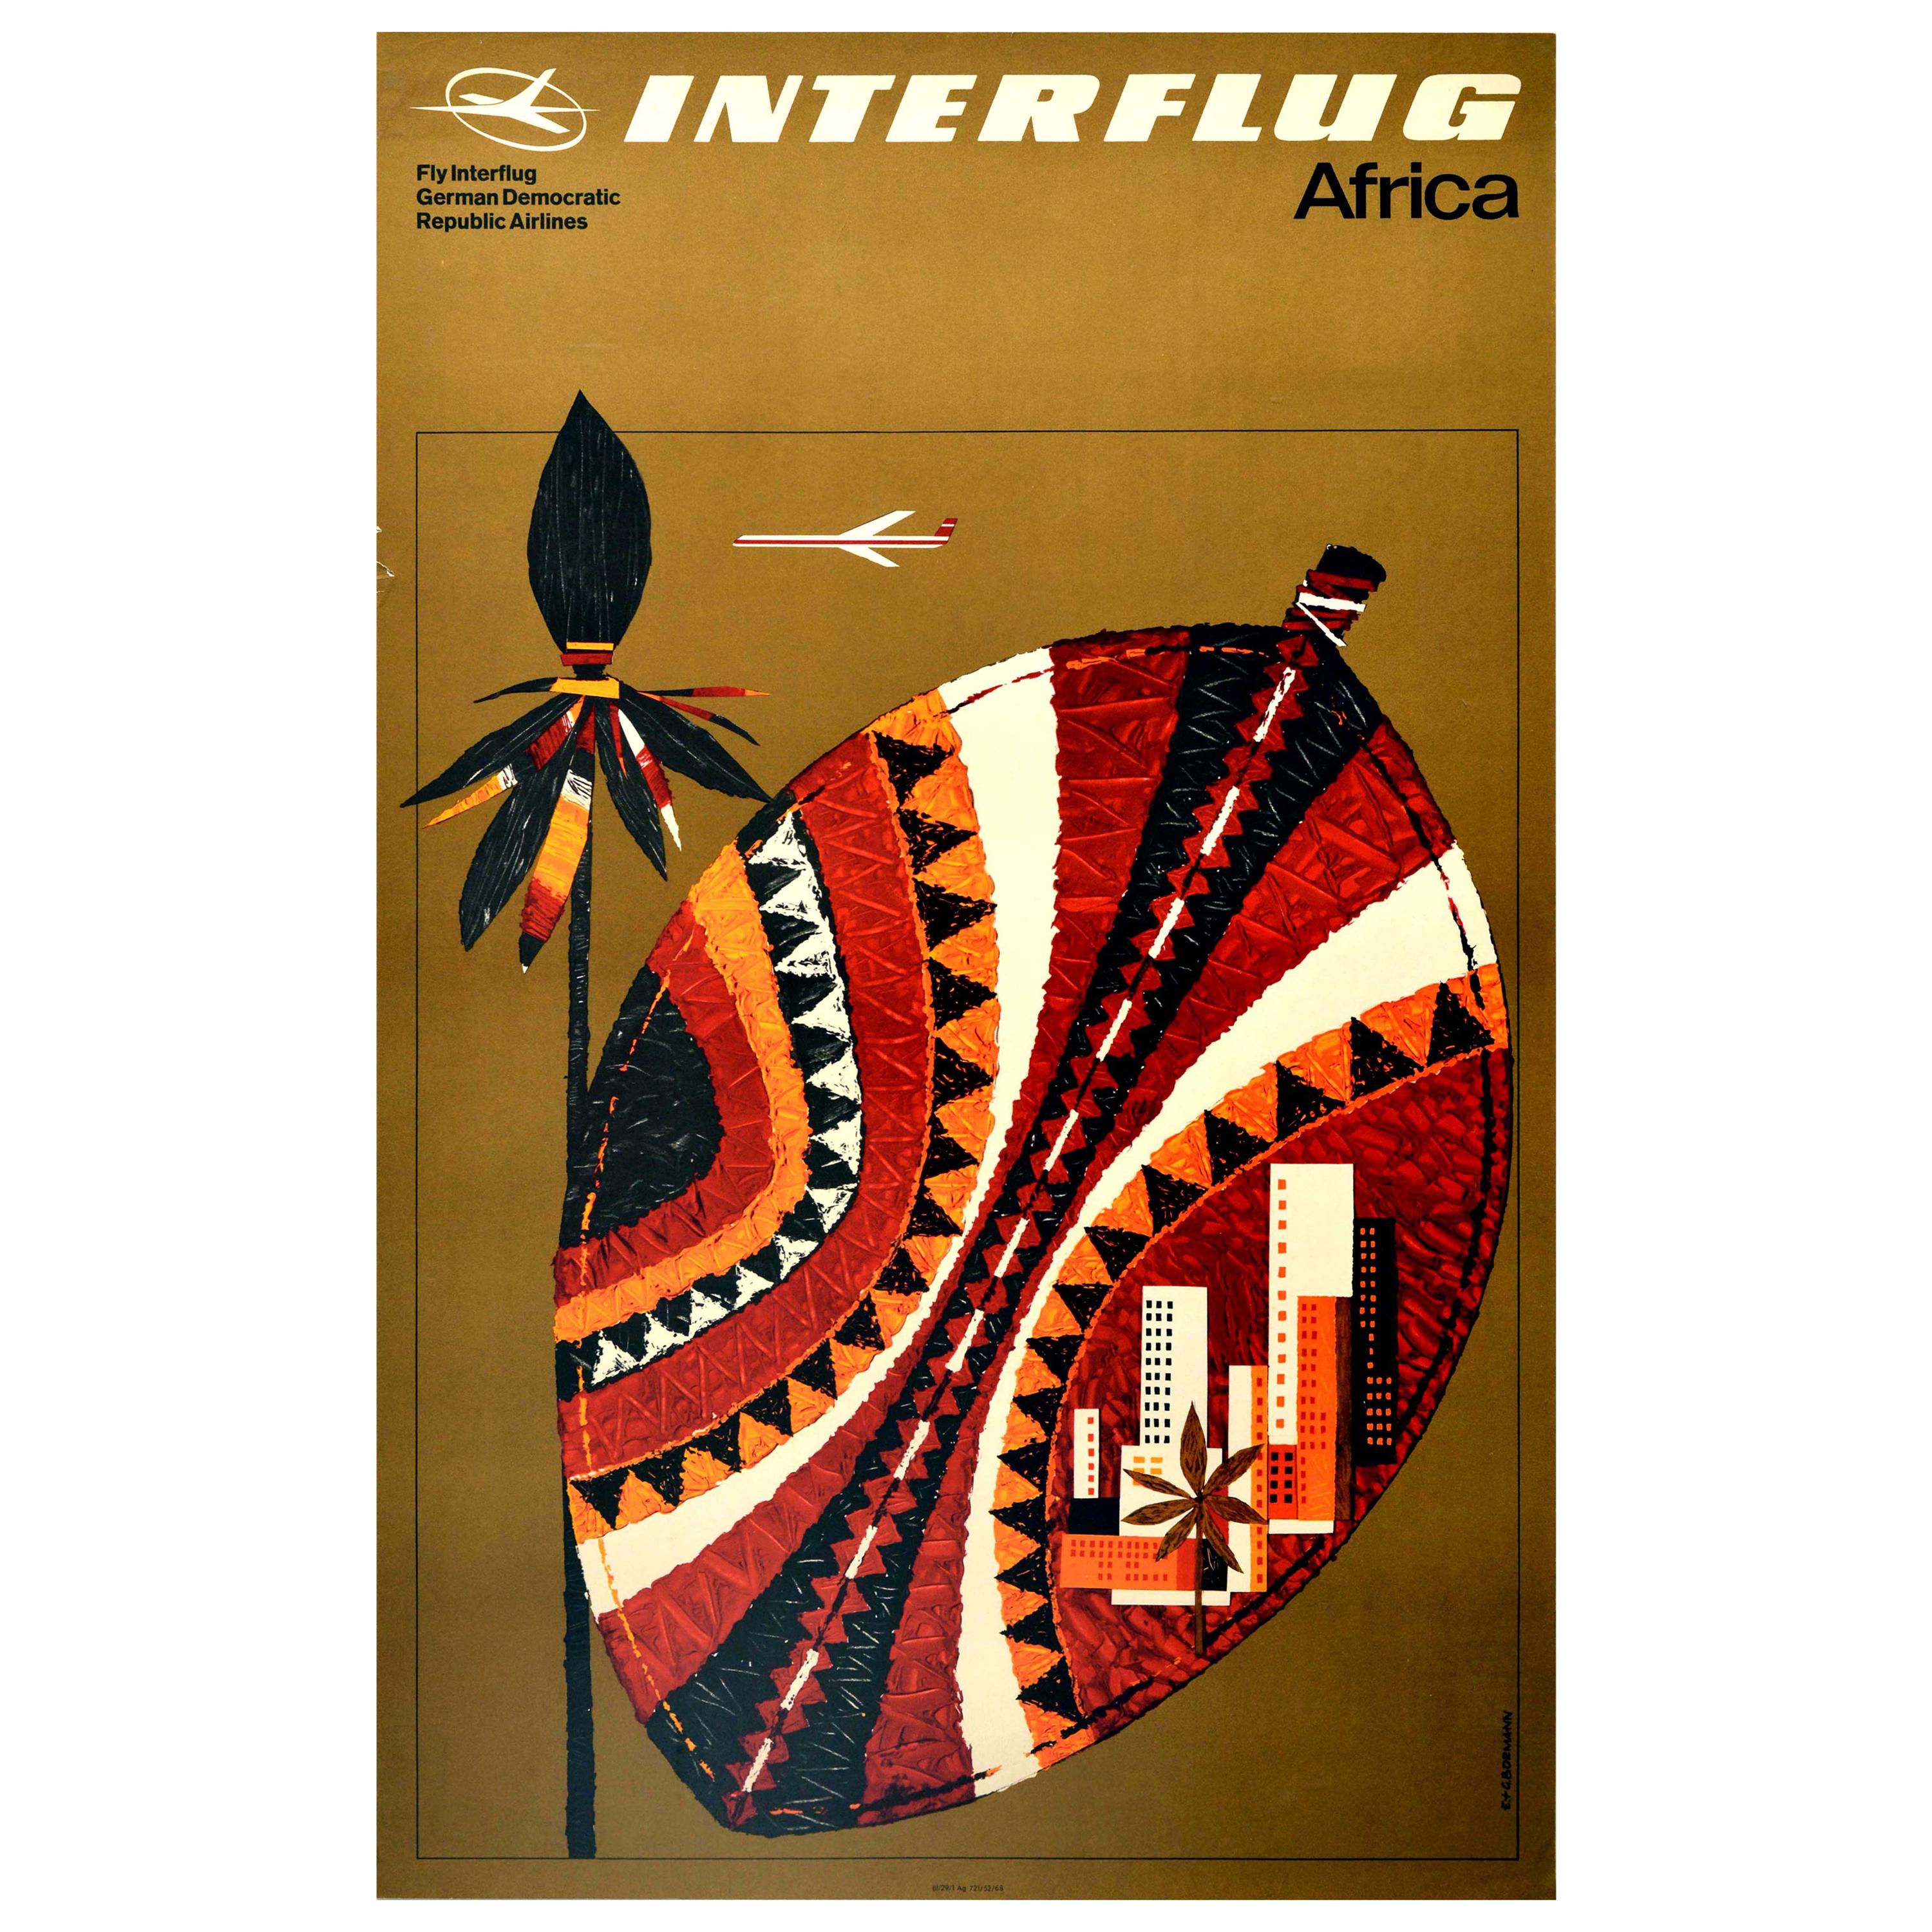 Affiche vintage originale, Africa, Fly Interflug, German Democratic Republic Airlines en vente